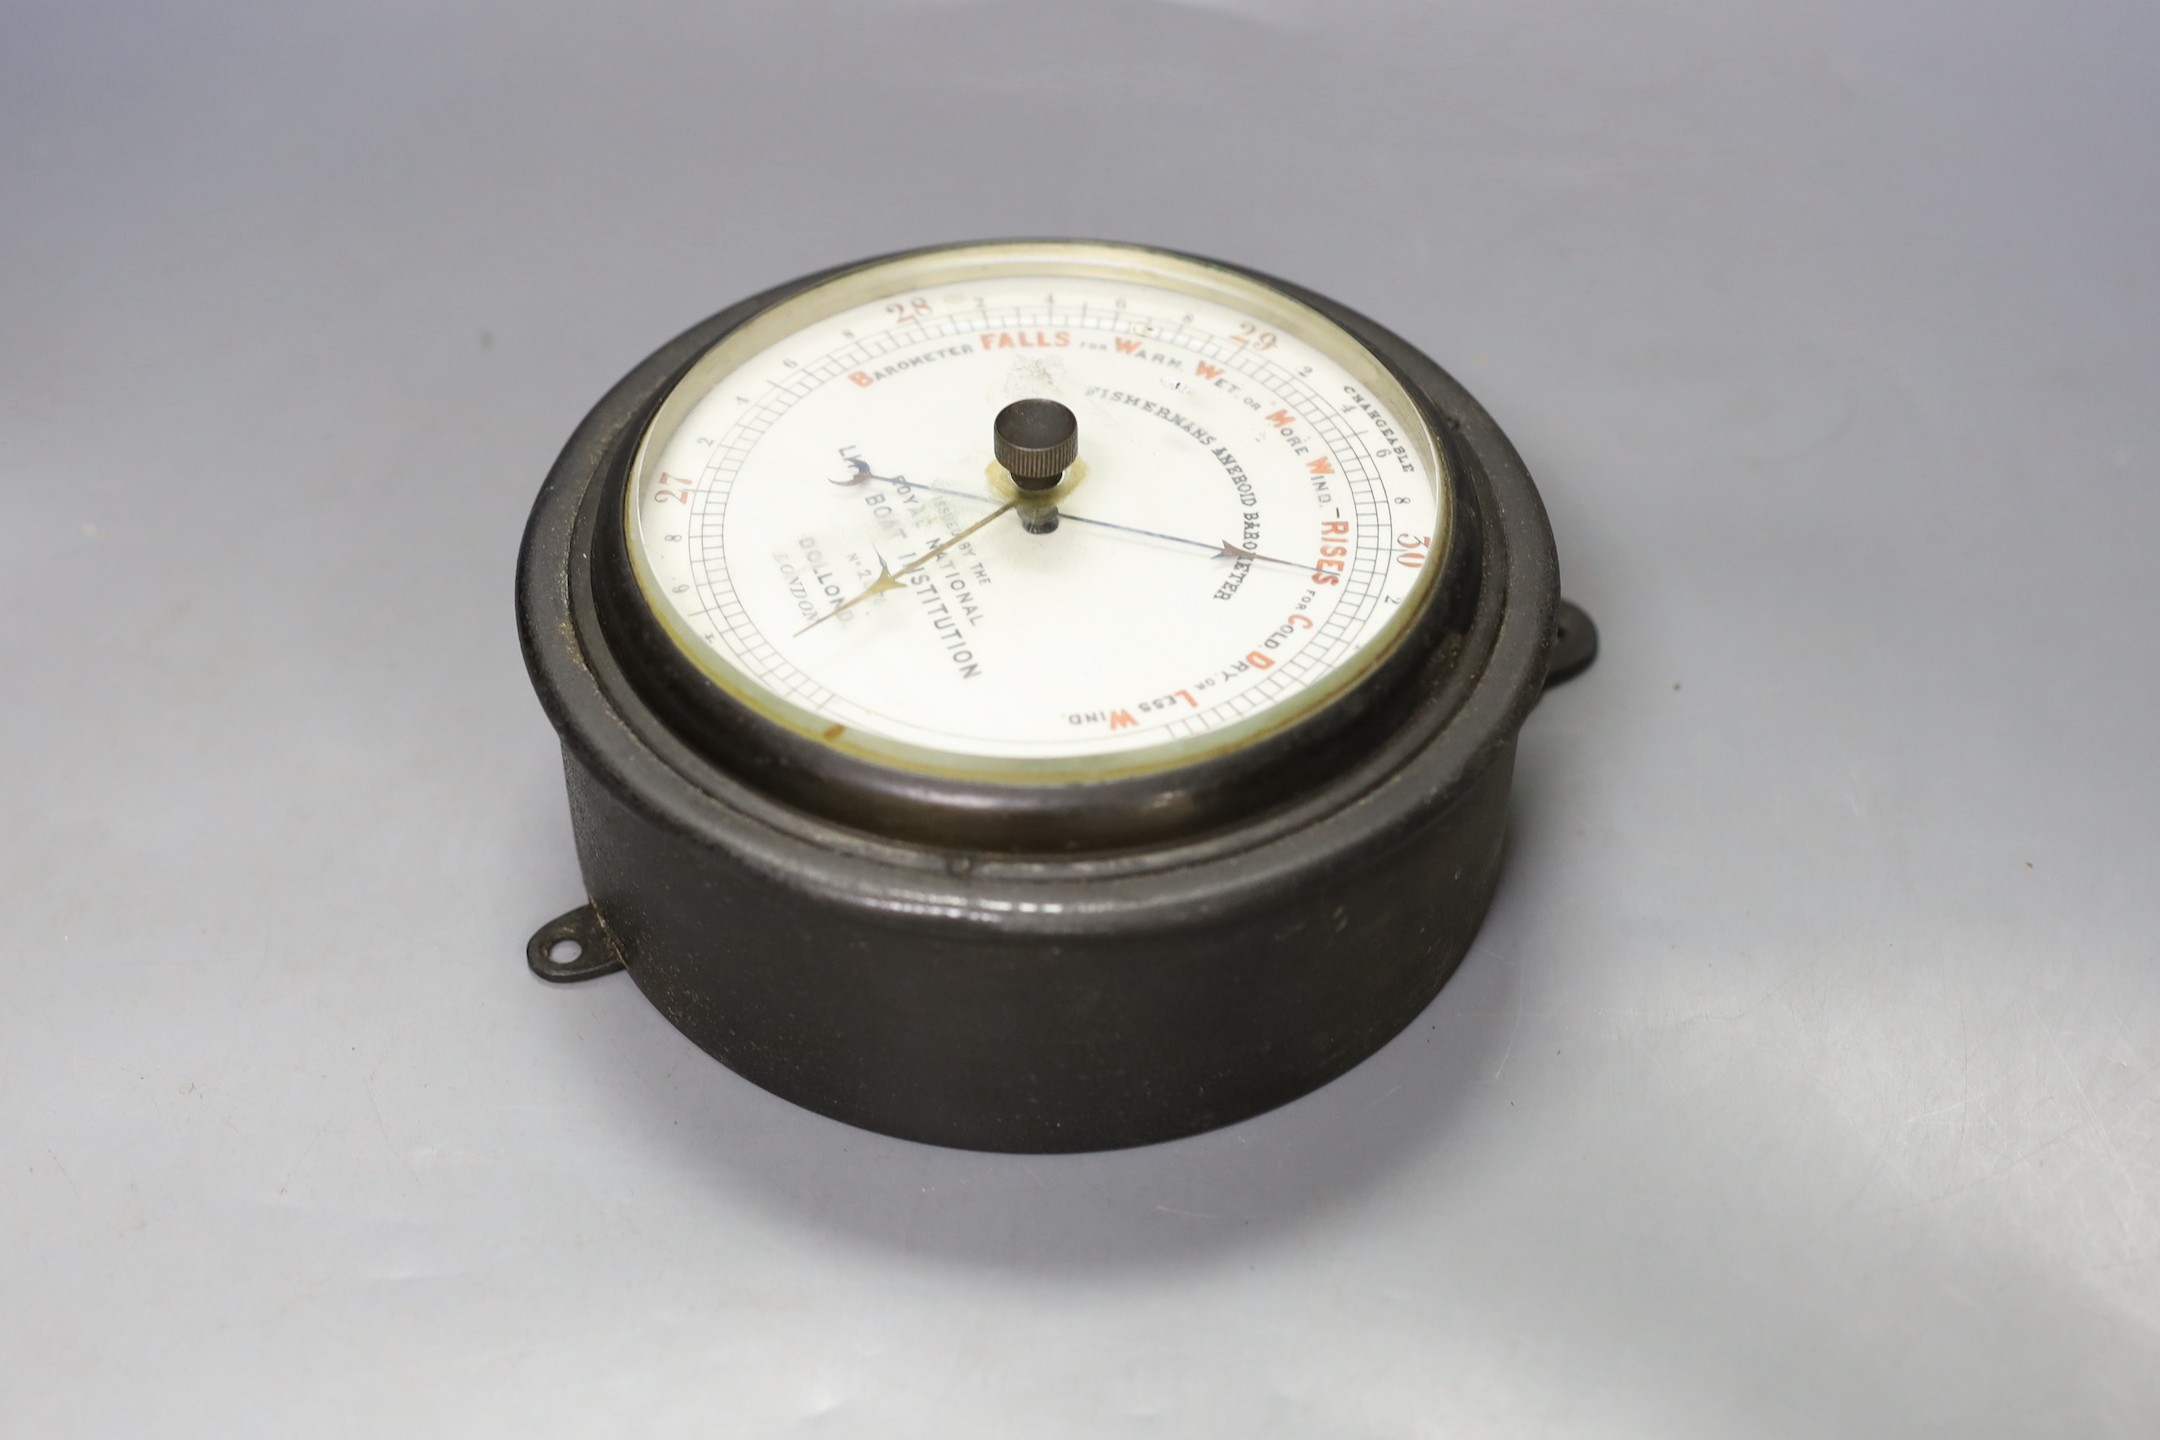 Dollond RNLI aneroid barometer - 16.5cm diameter - Image 2 of 3